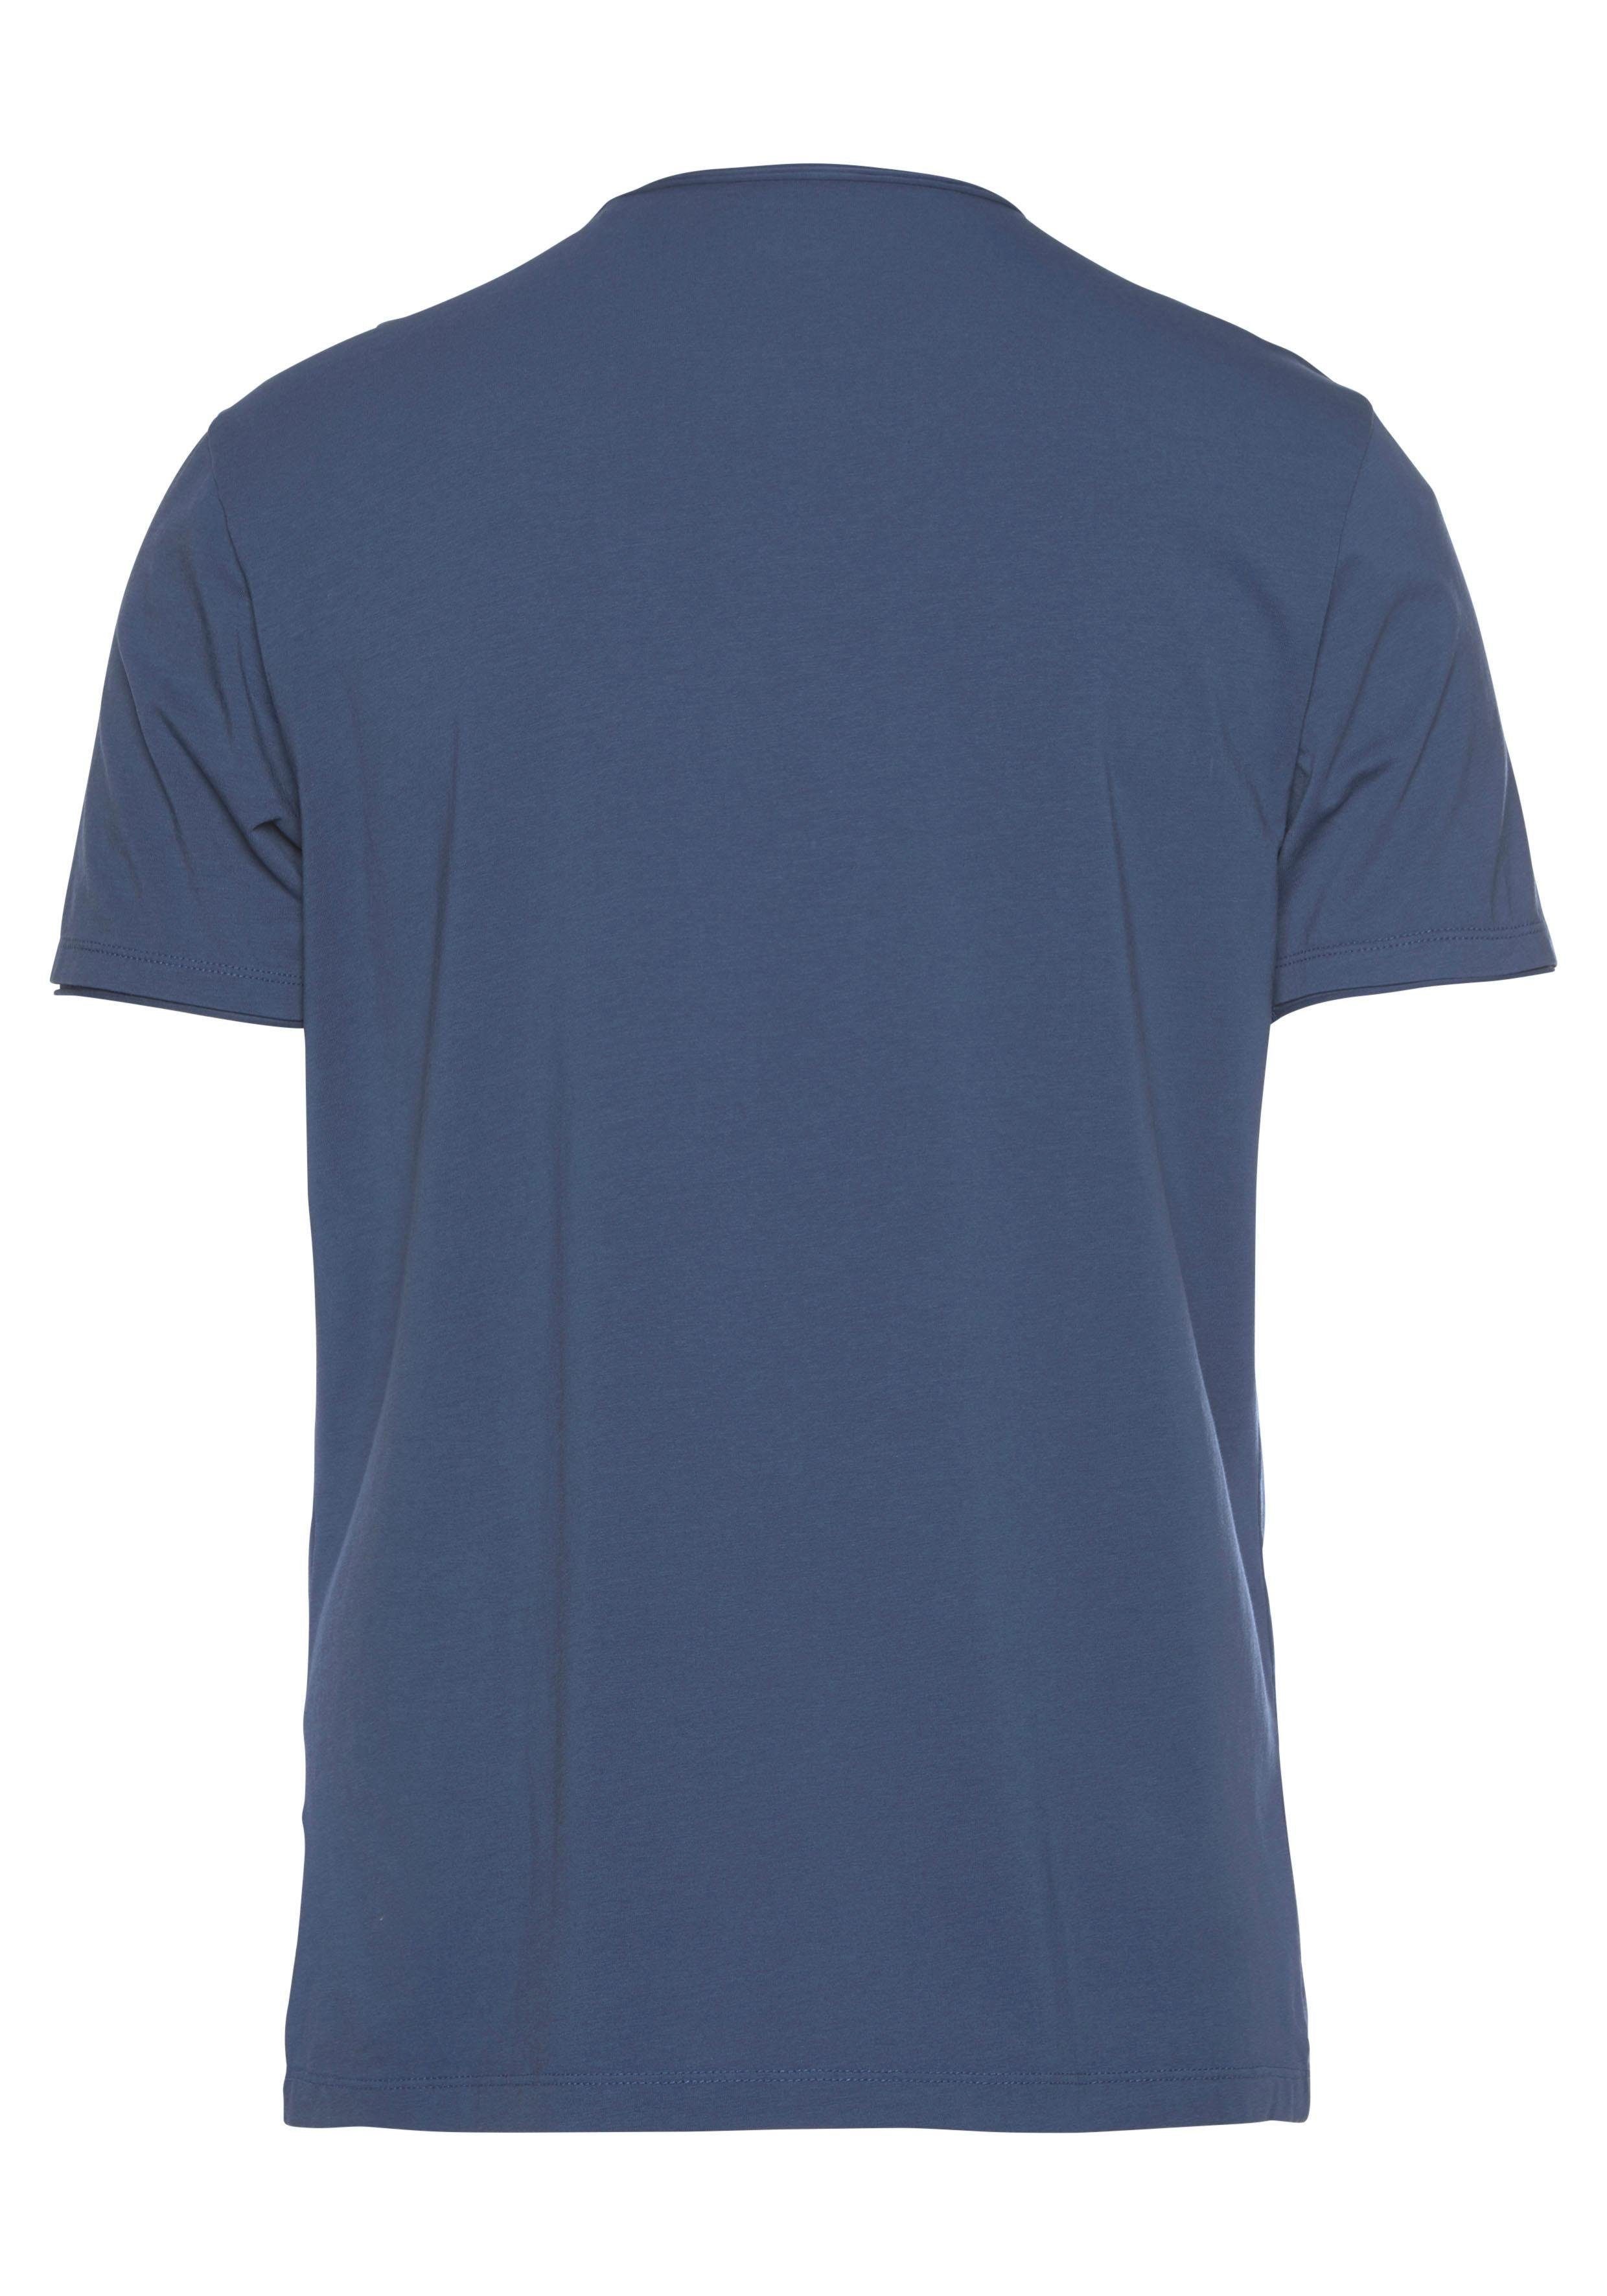 T-Shirt feinem fit body OLYMP aus Level indigo Jersey Five